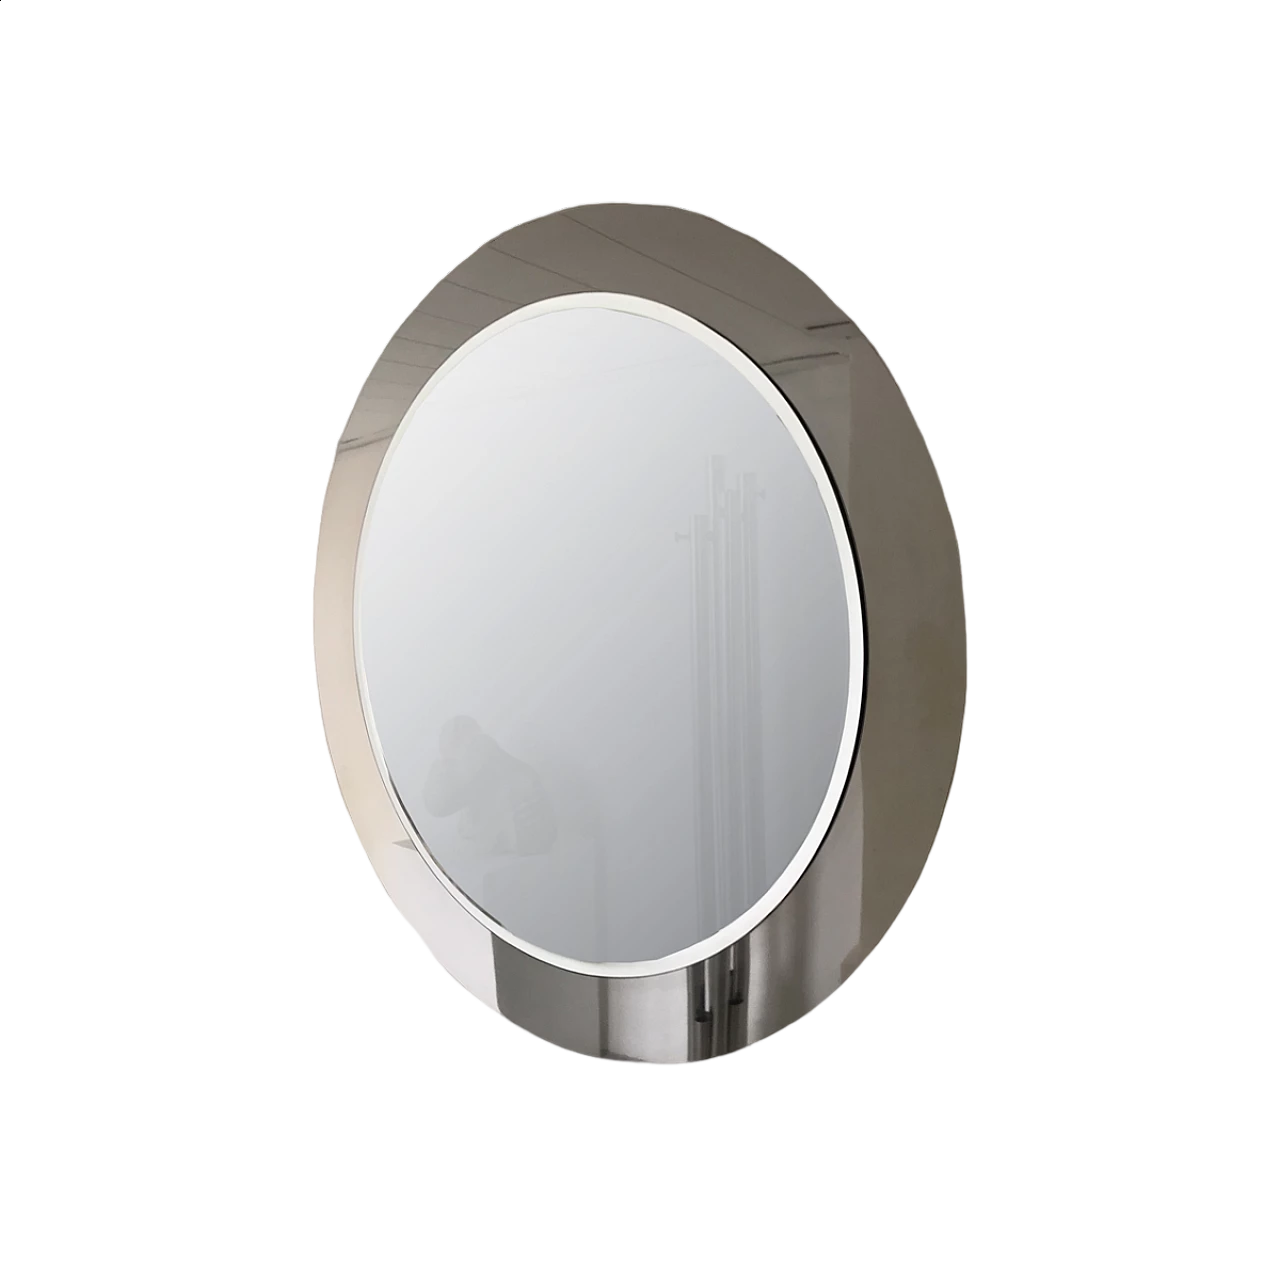 Circular mirror with metal frame, 1960s 1060300